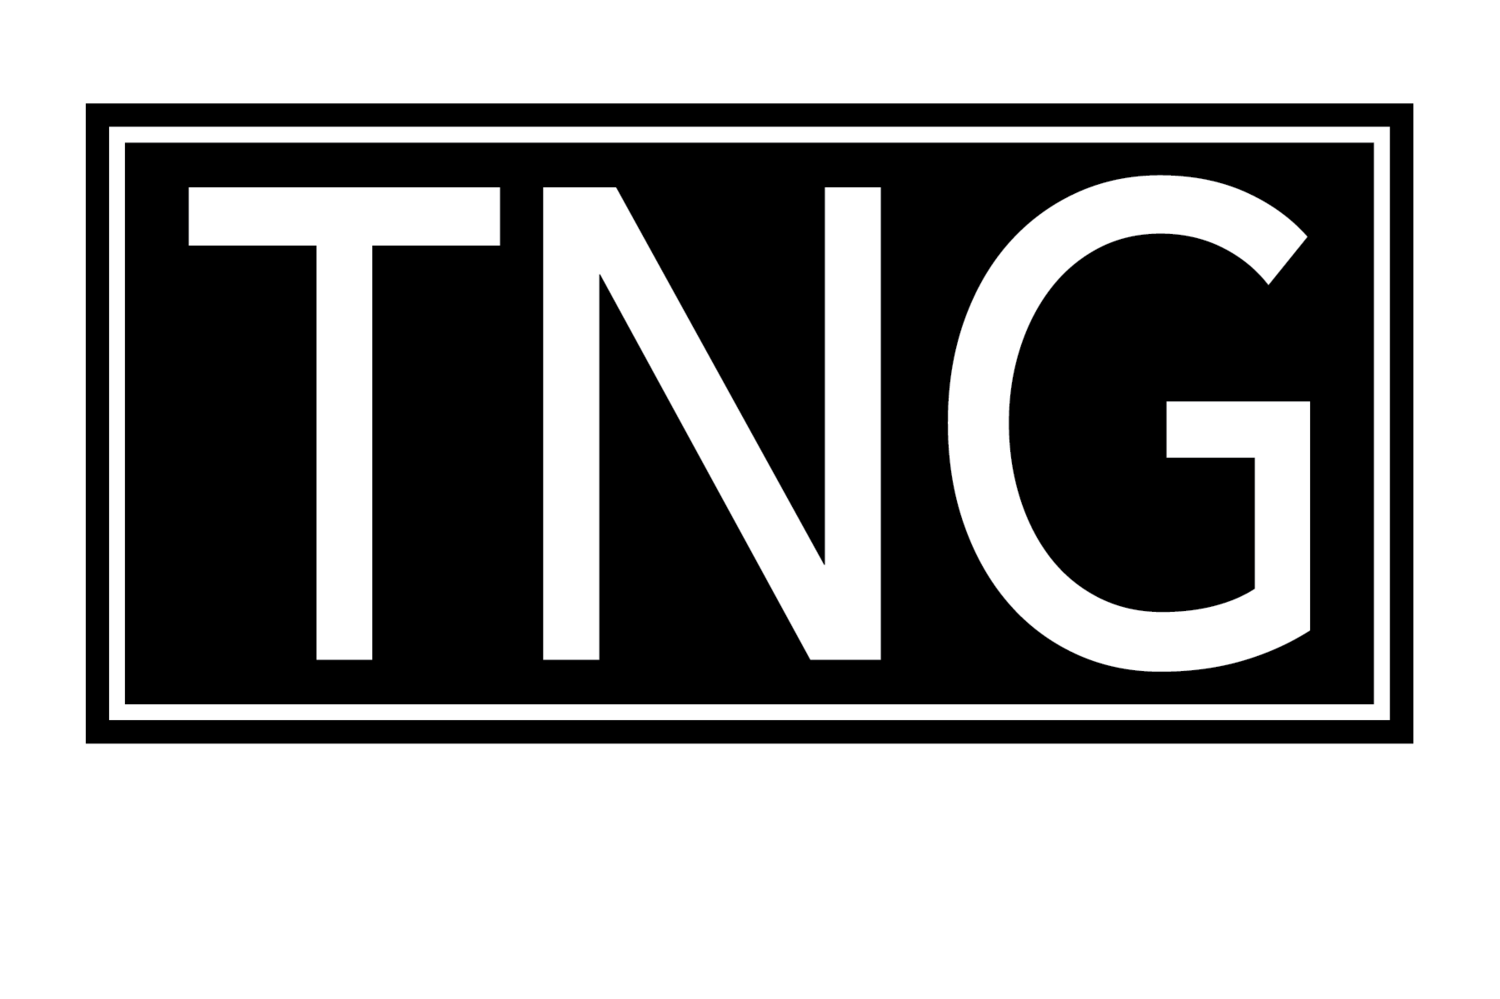 The Newberg Group